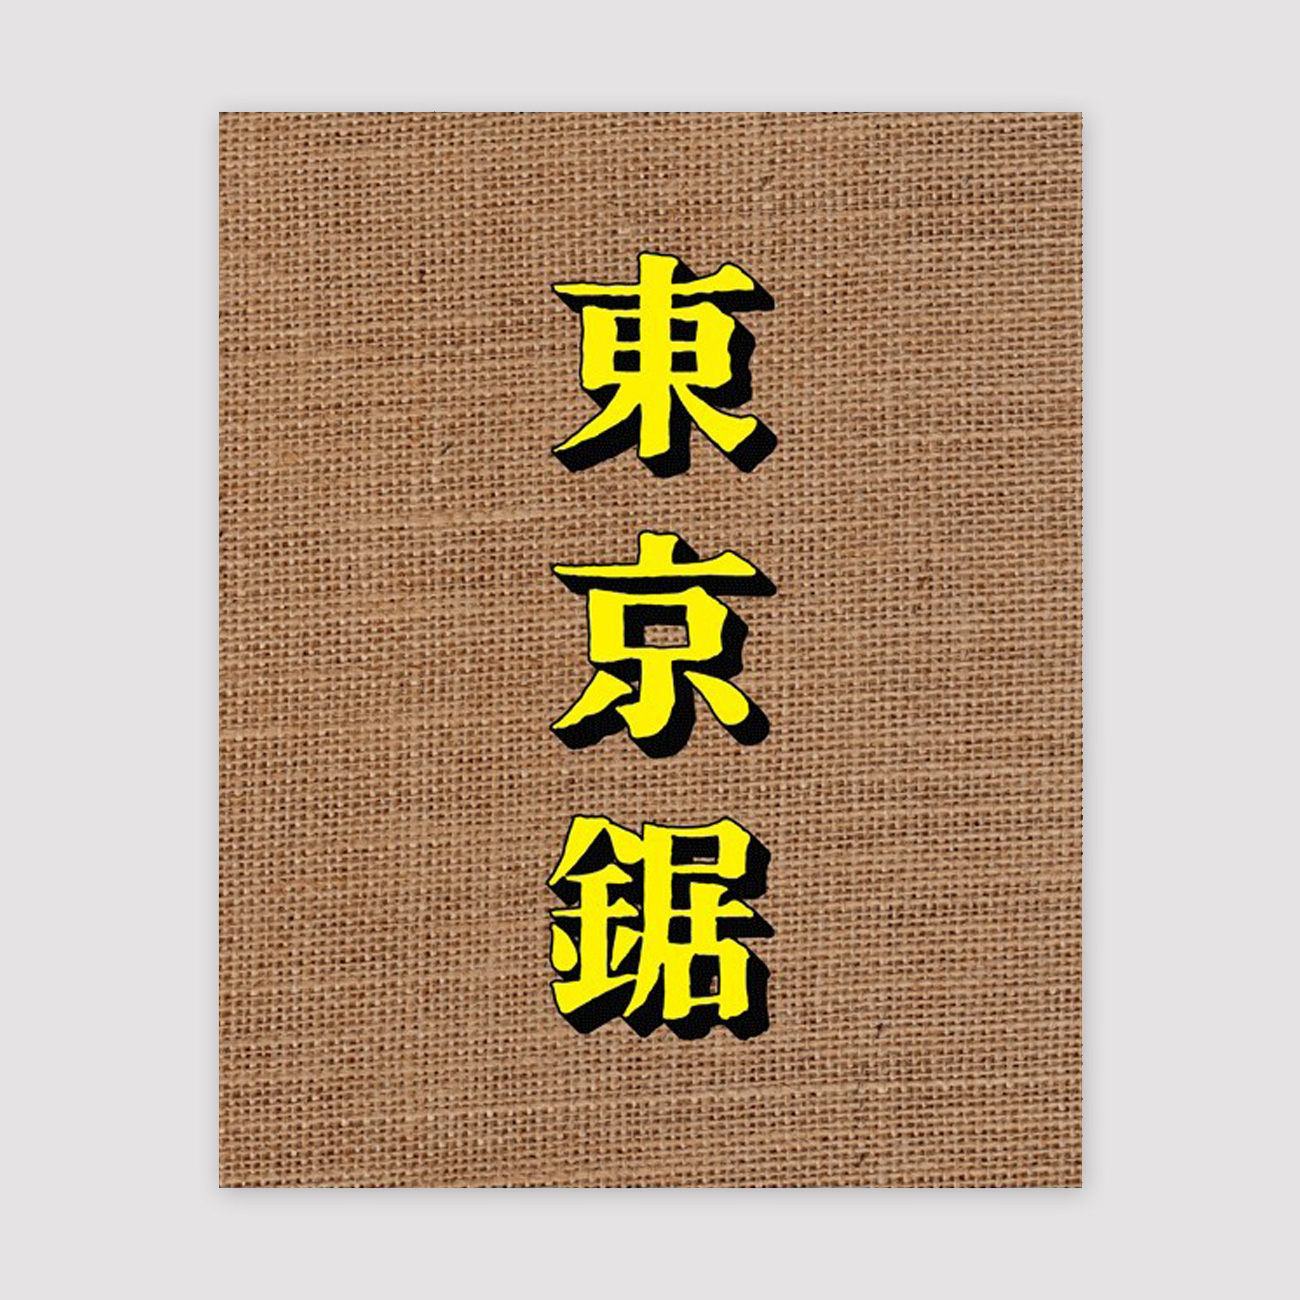 Tokyo Nokogiri, Reisetagebuch, illustriert, Japan, Softcover,